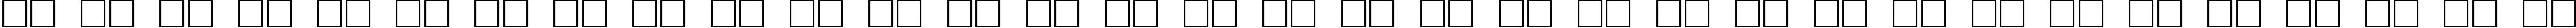 Пример написания русского алфавита шрифтом AGHlvCyrillic Bold115b